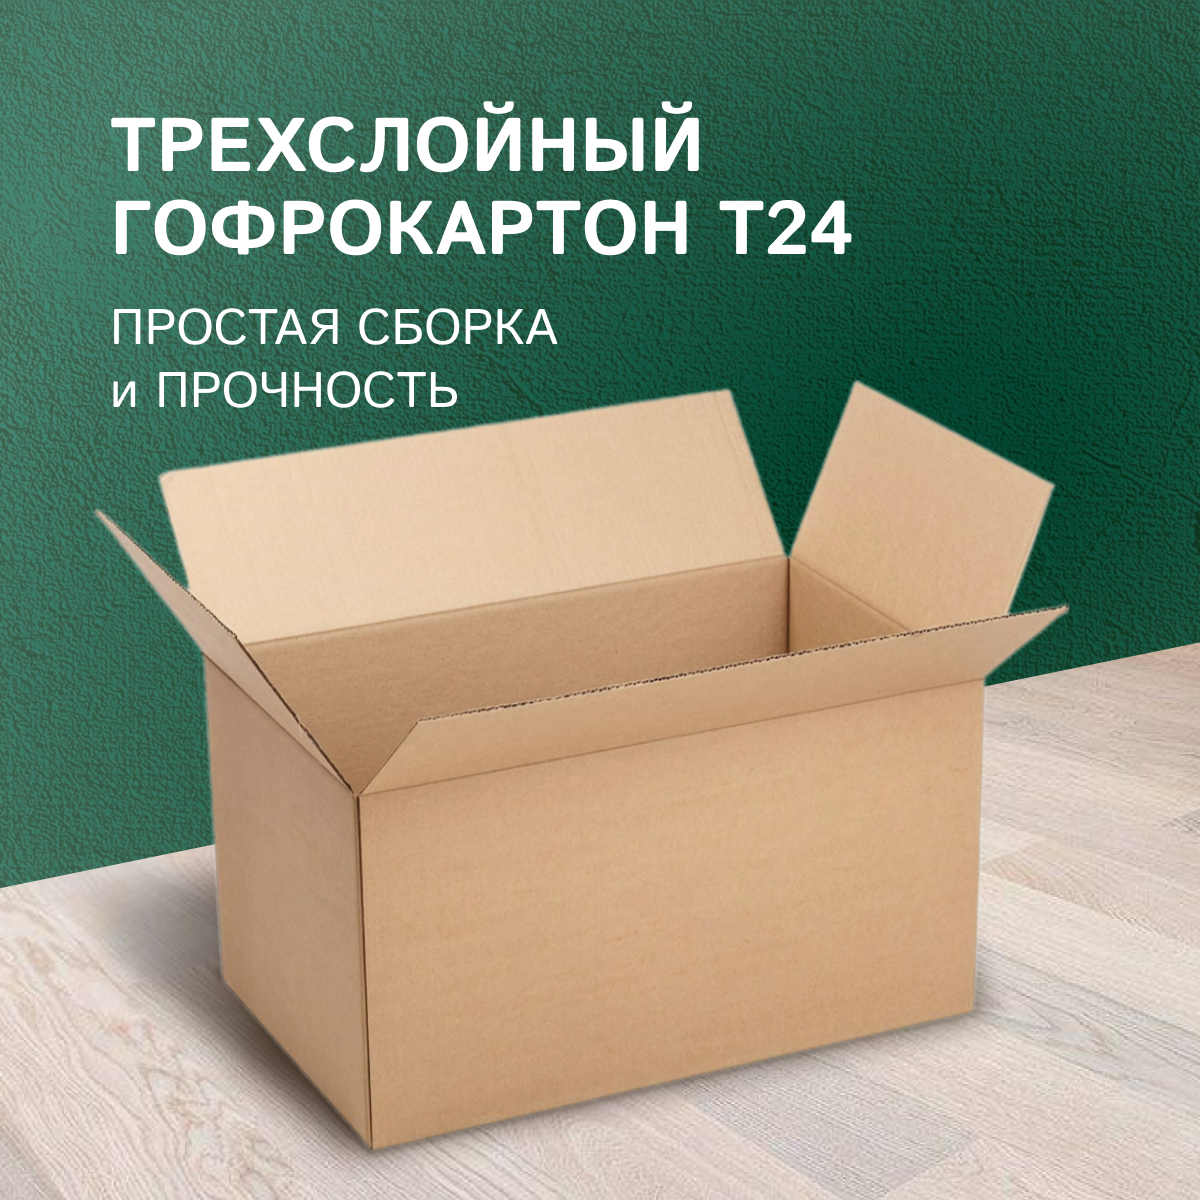 Коробки для хранения и переезда , 5 штук, размер 60x40x40 см, Т24